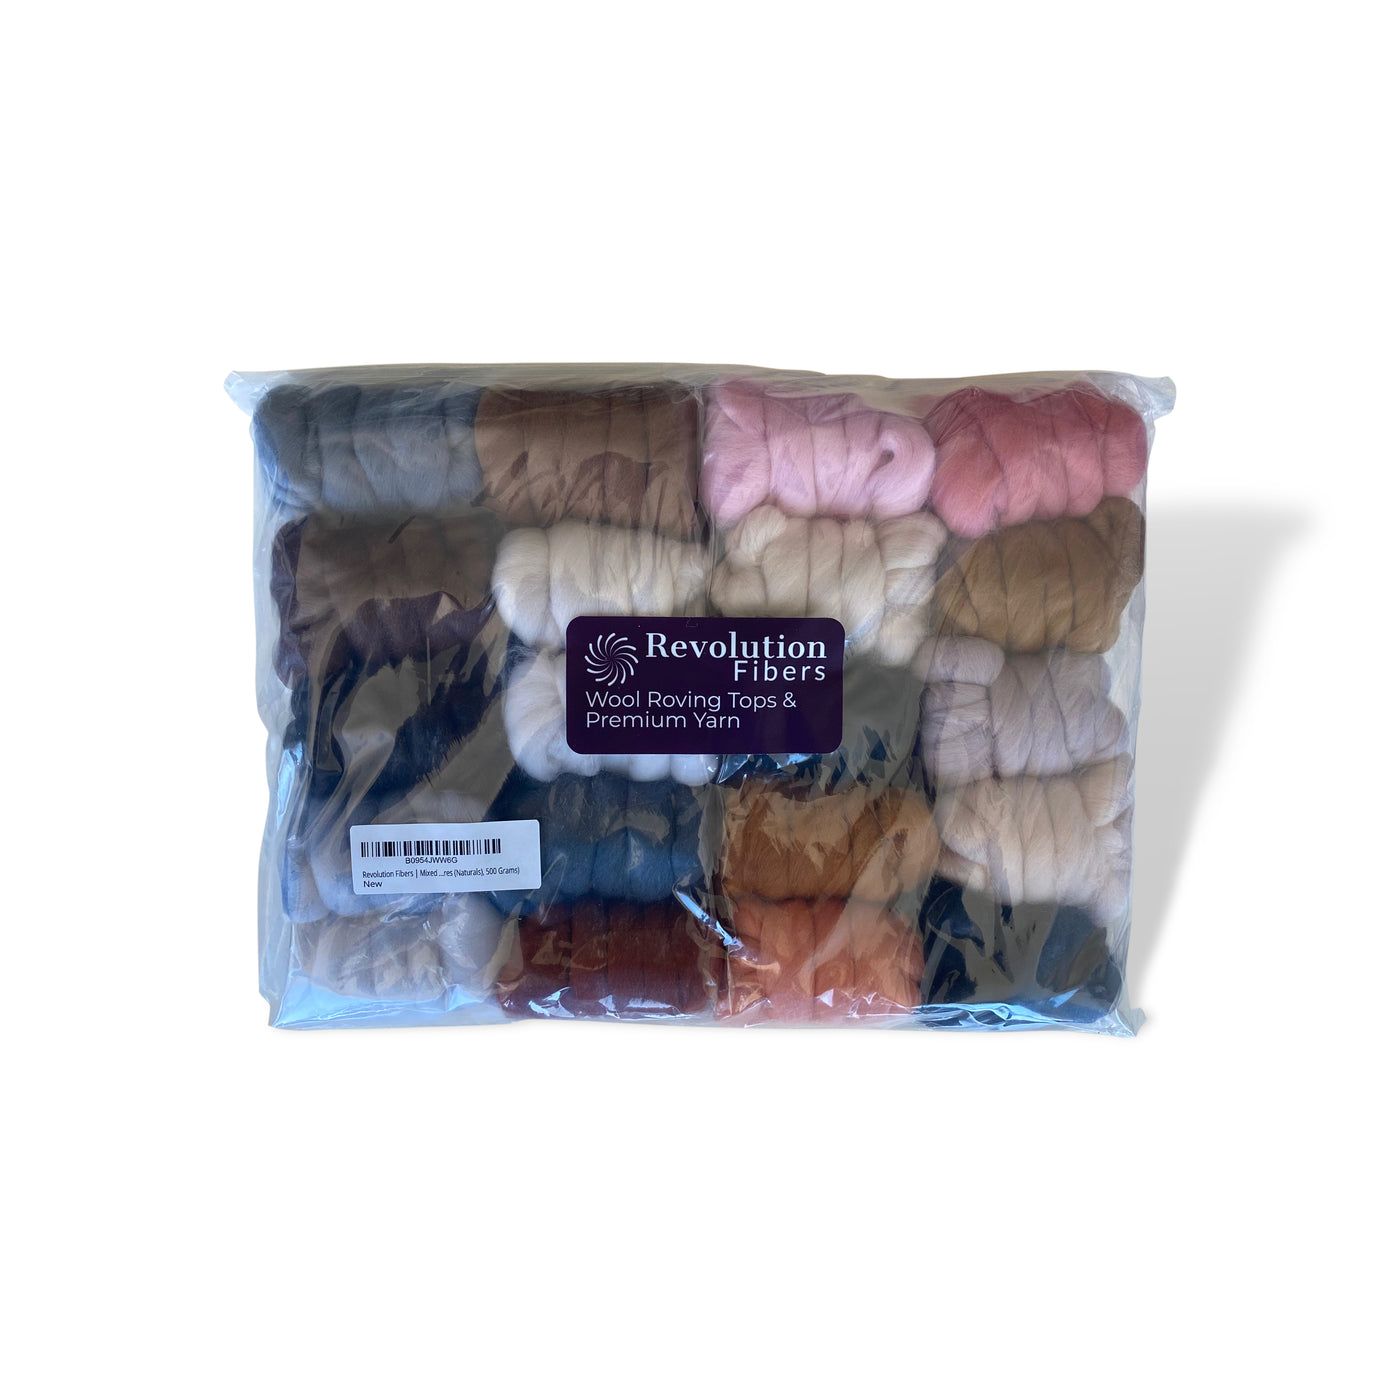 Pack of 12 Multicolour Balls of Merino Roving Wool, Felting, Weaving, –  Imagina Natural